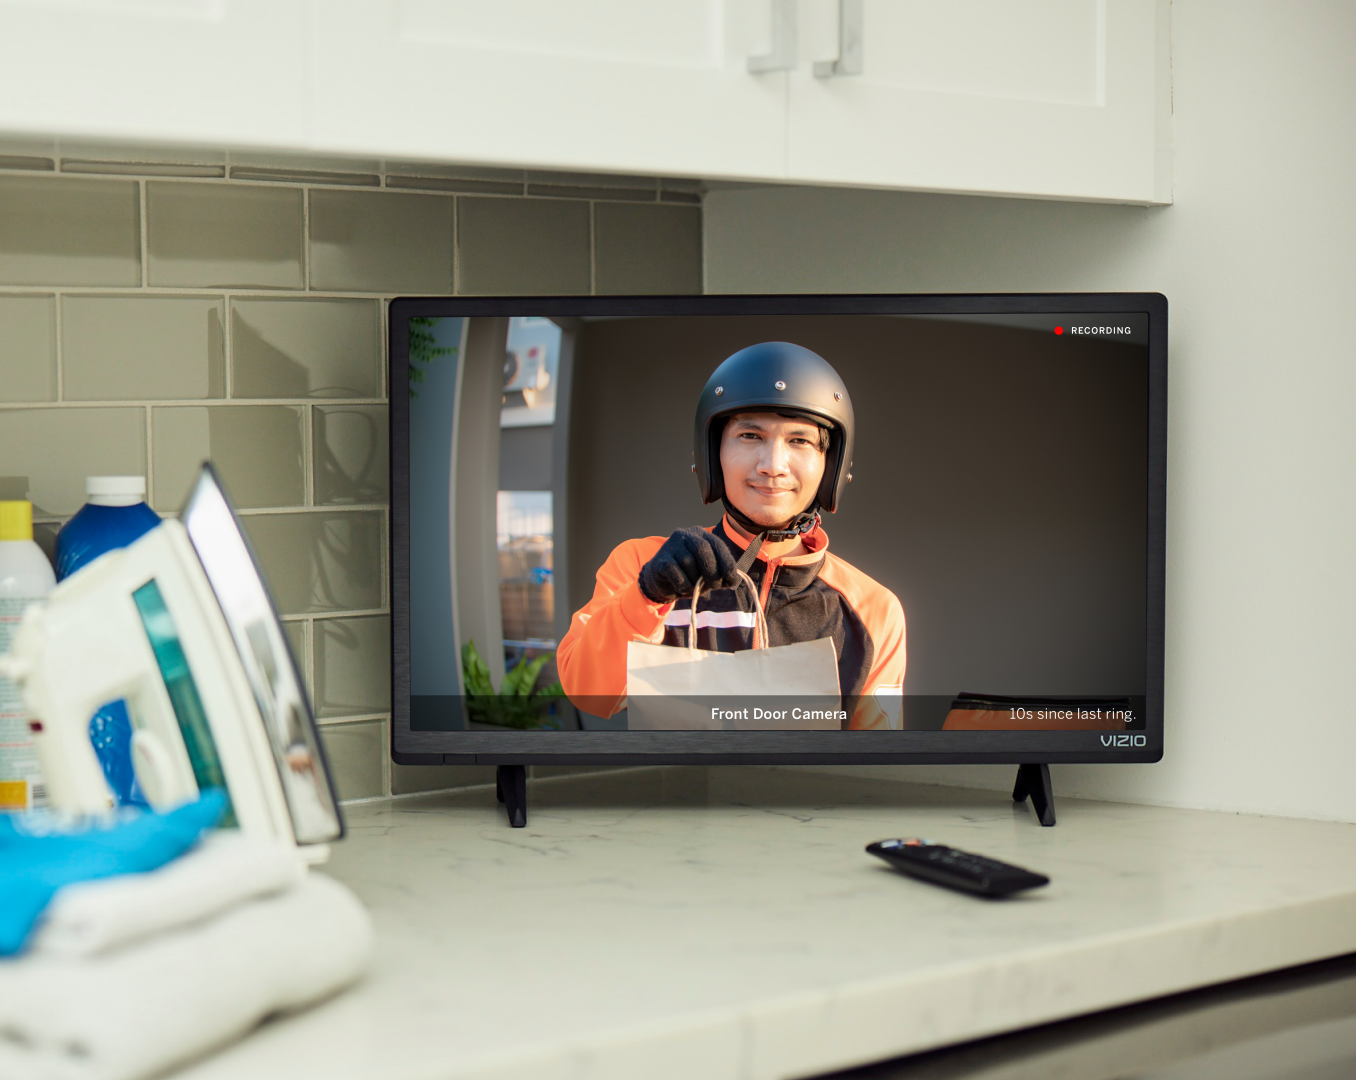 Smart TV SmartCast D24h-J09 de la serie D de 24 pulgadas, 720p, HD, LED, de  voz (renovado)